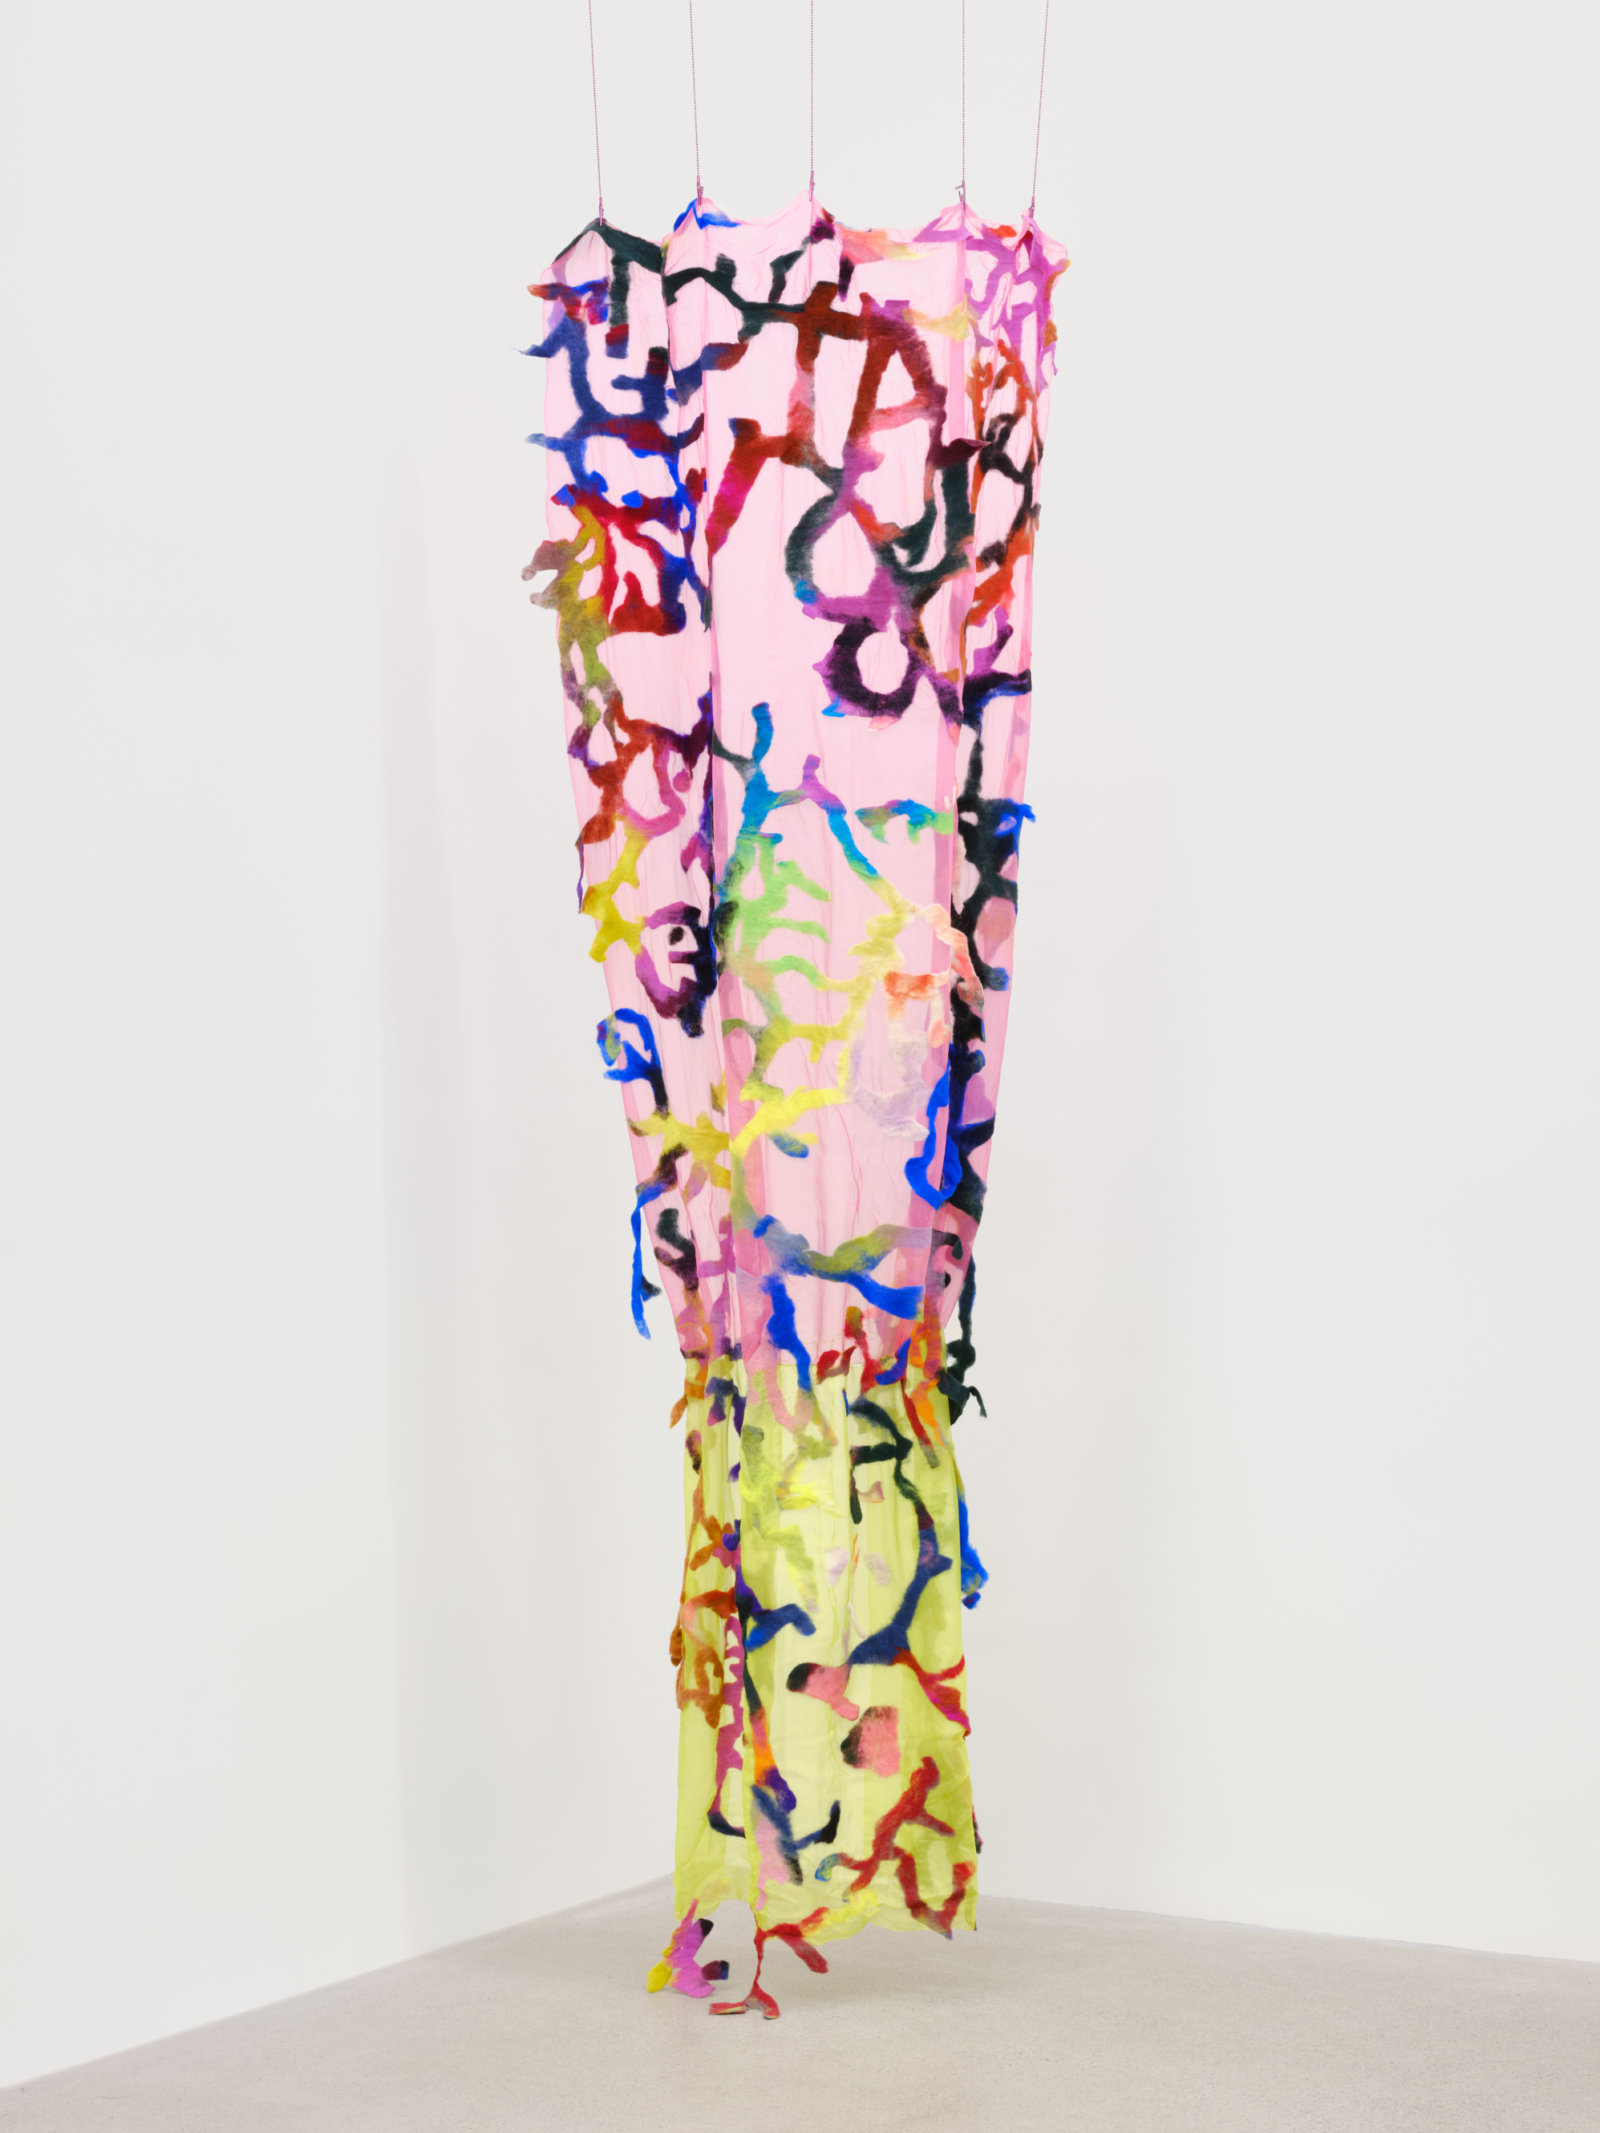 Rebecca Brewer, Total Loss, 2019, silk, wool felt, alligator clips, ball chain, 114 x 52 in. (290 x 132 cm)